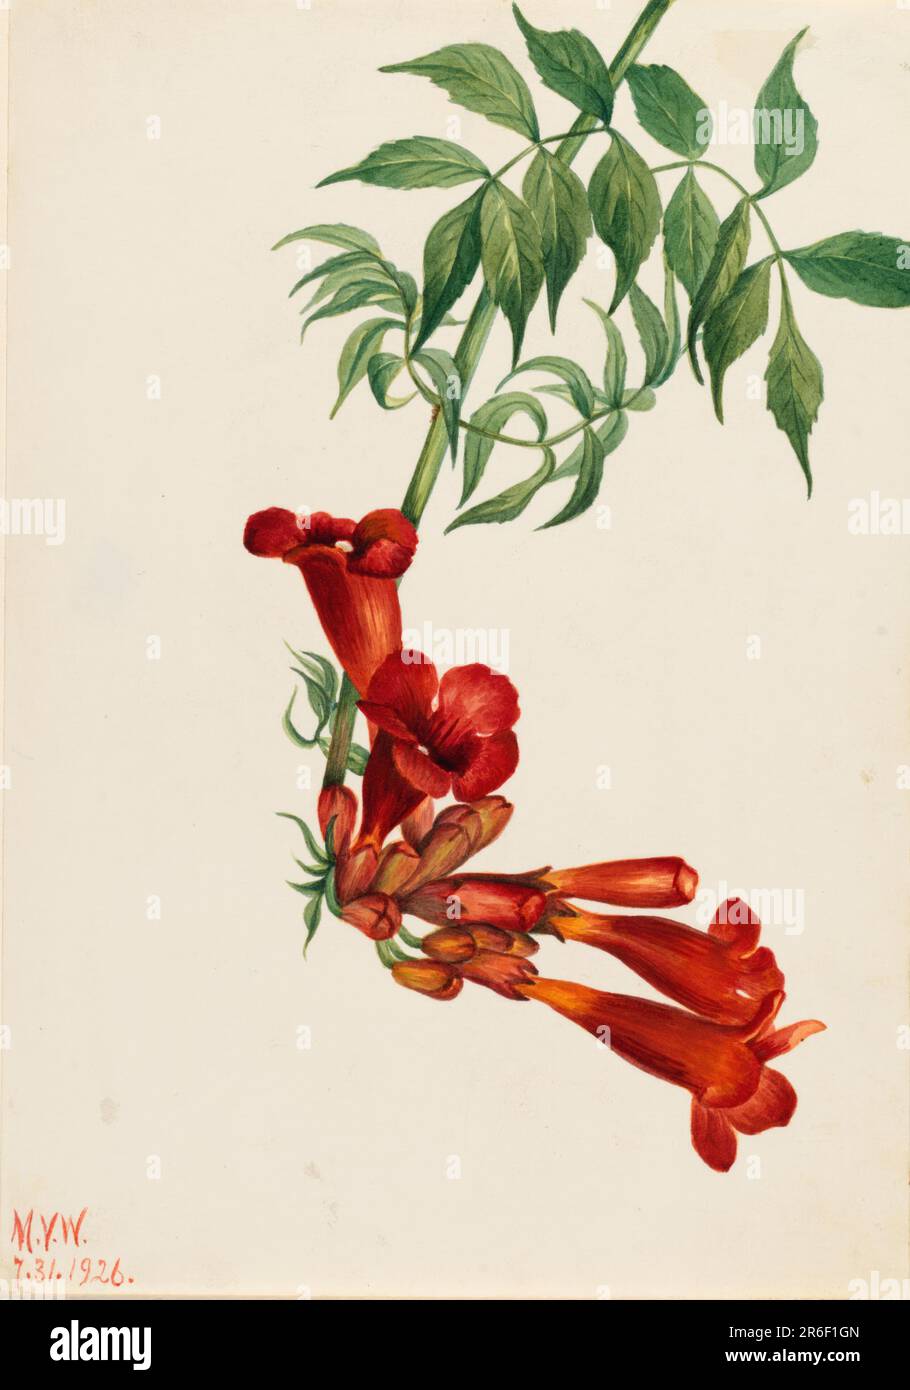 Trumpet Creeper (Bignonia radicans). Date: 1926. Watercolor on paper. Museum: Smithsonian American Art Museum. Stock Photo